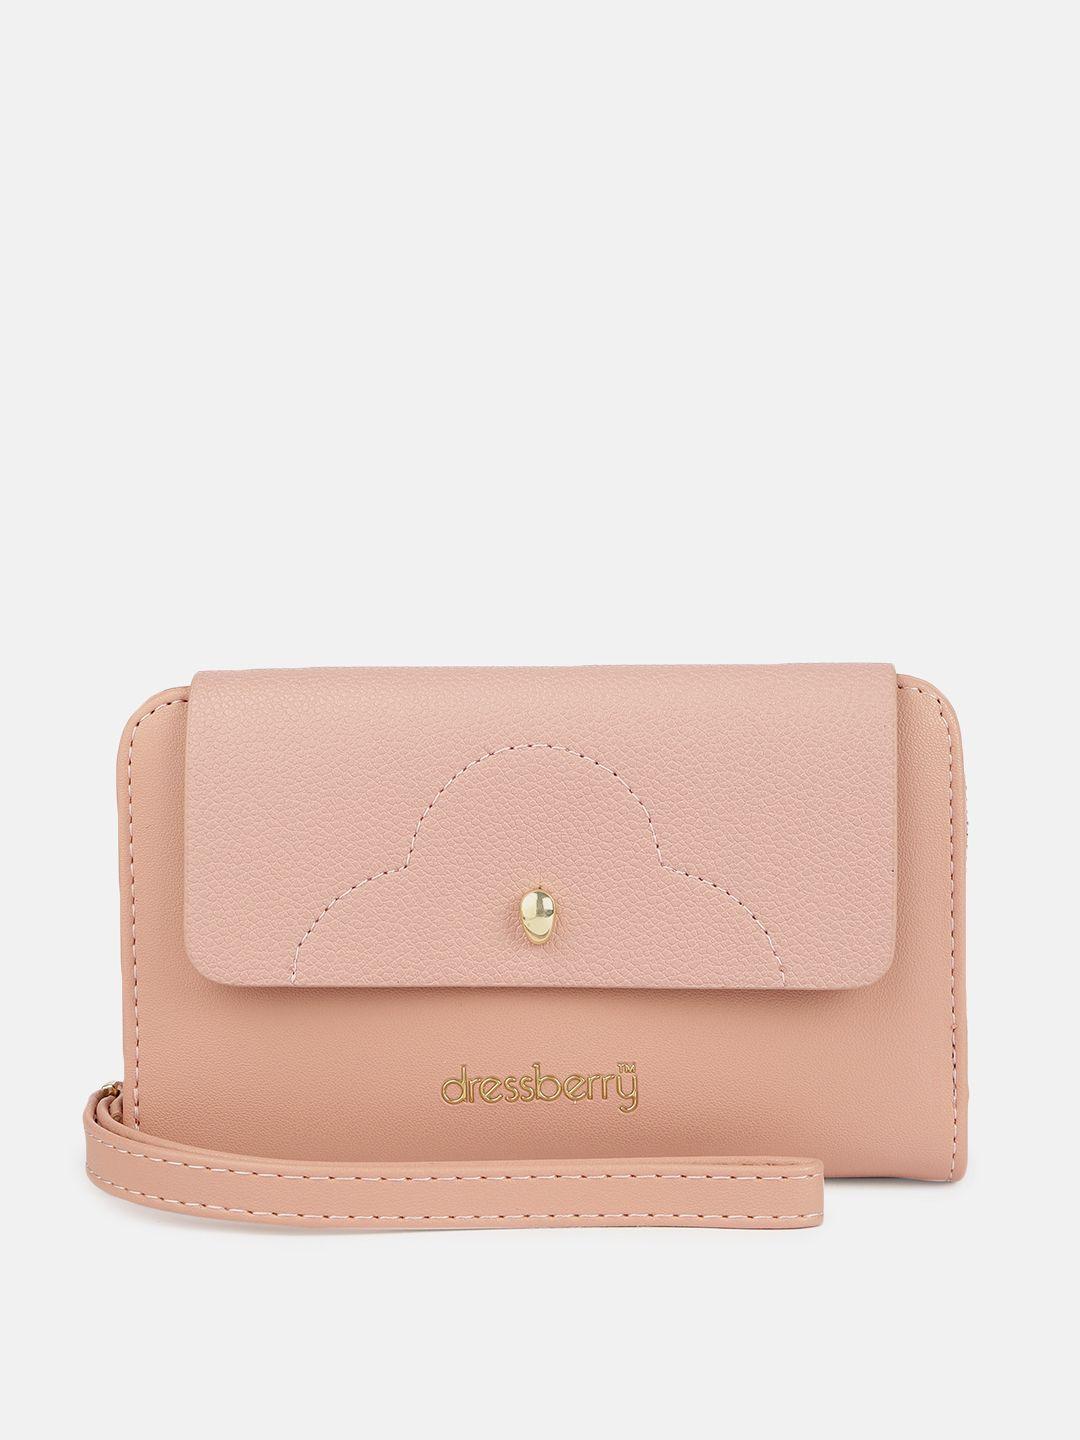 dressberry women pink solid zip around wallet